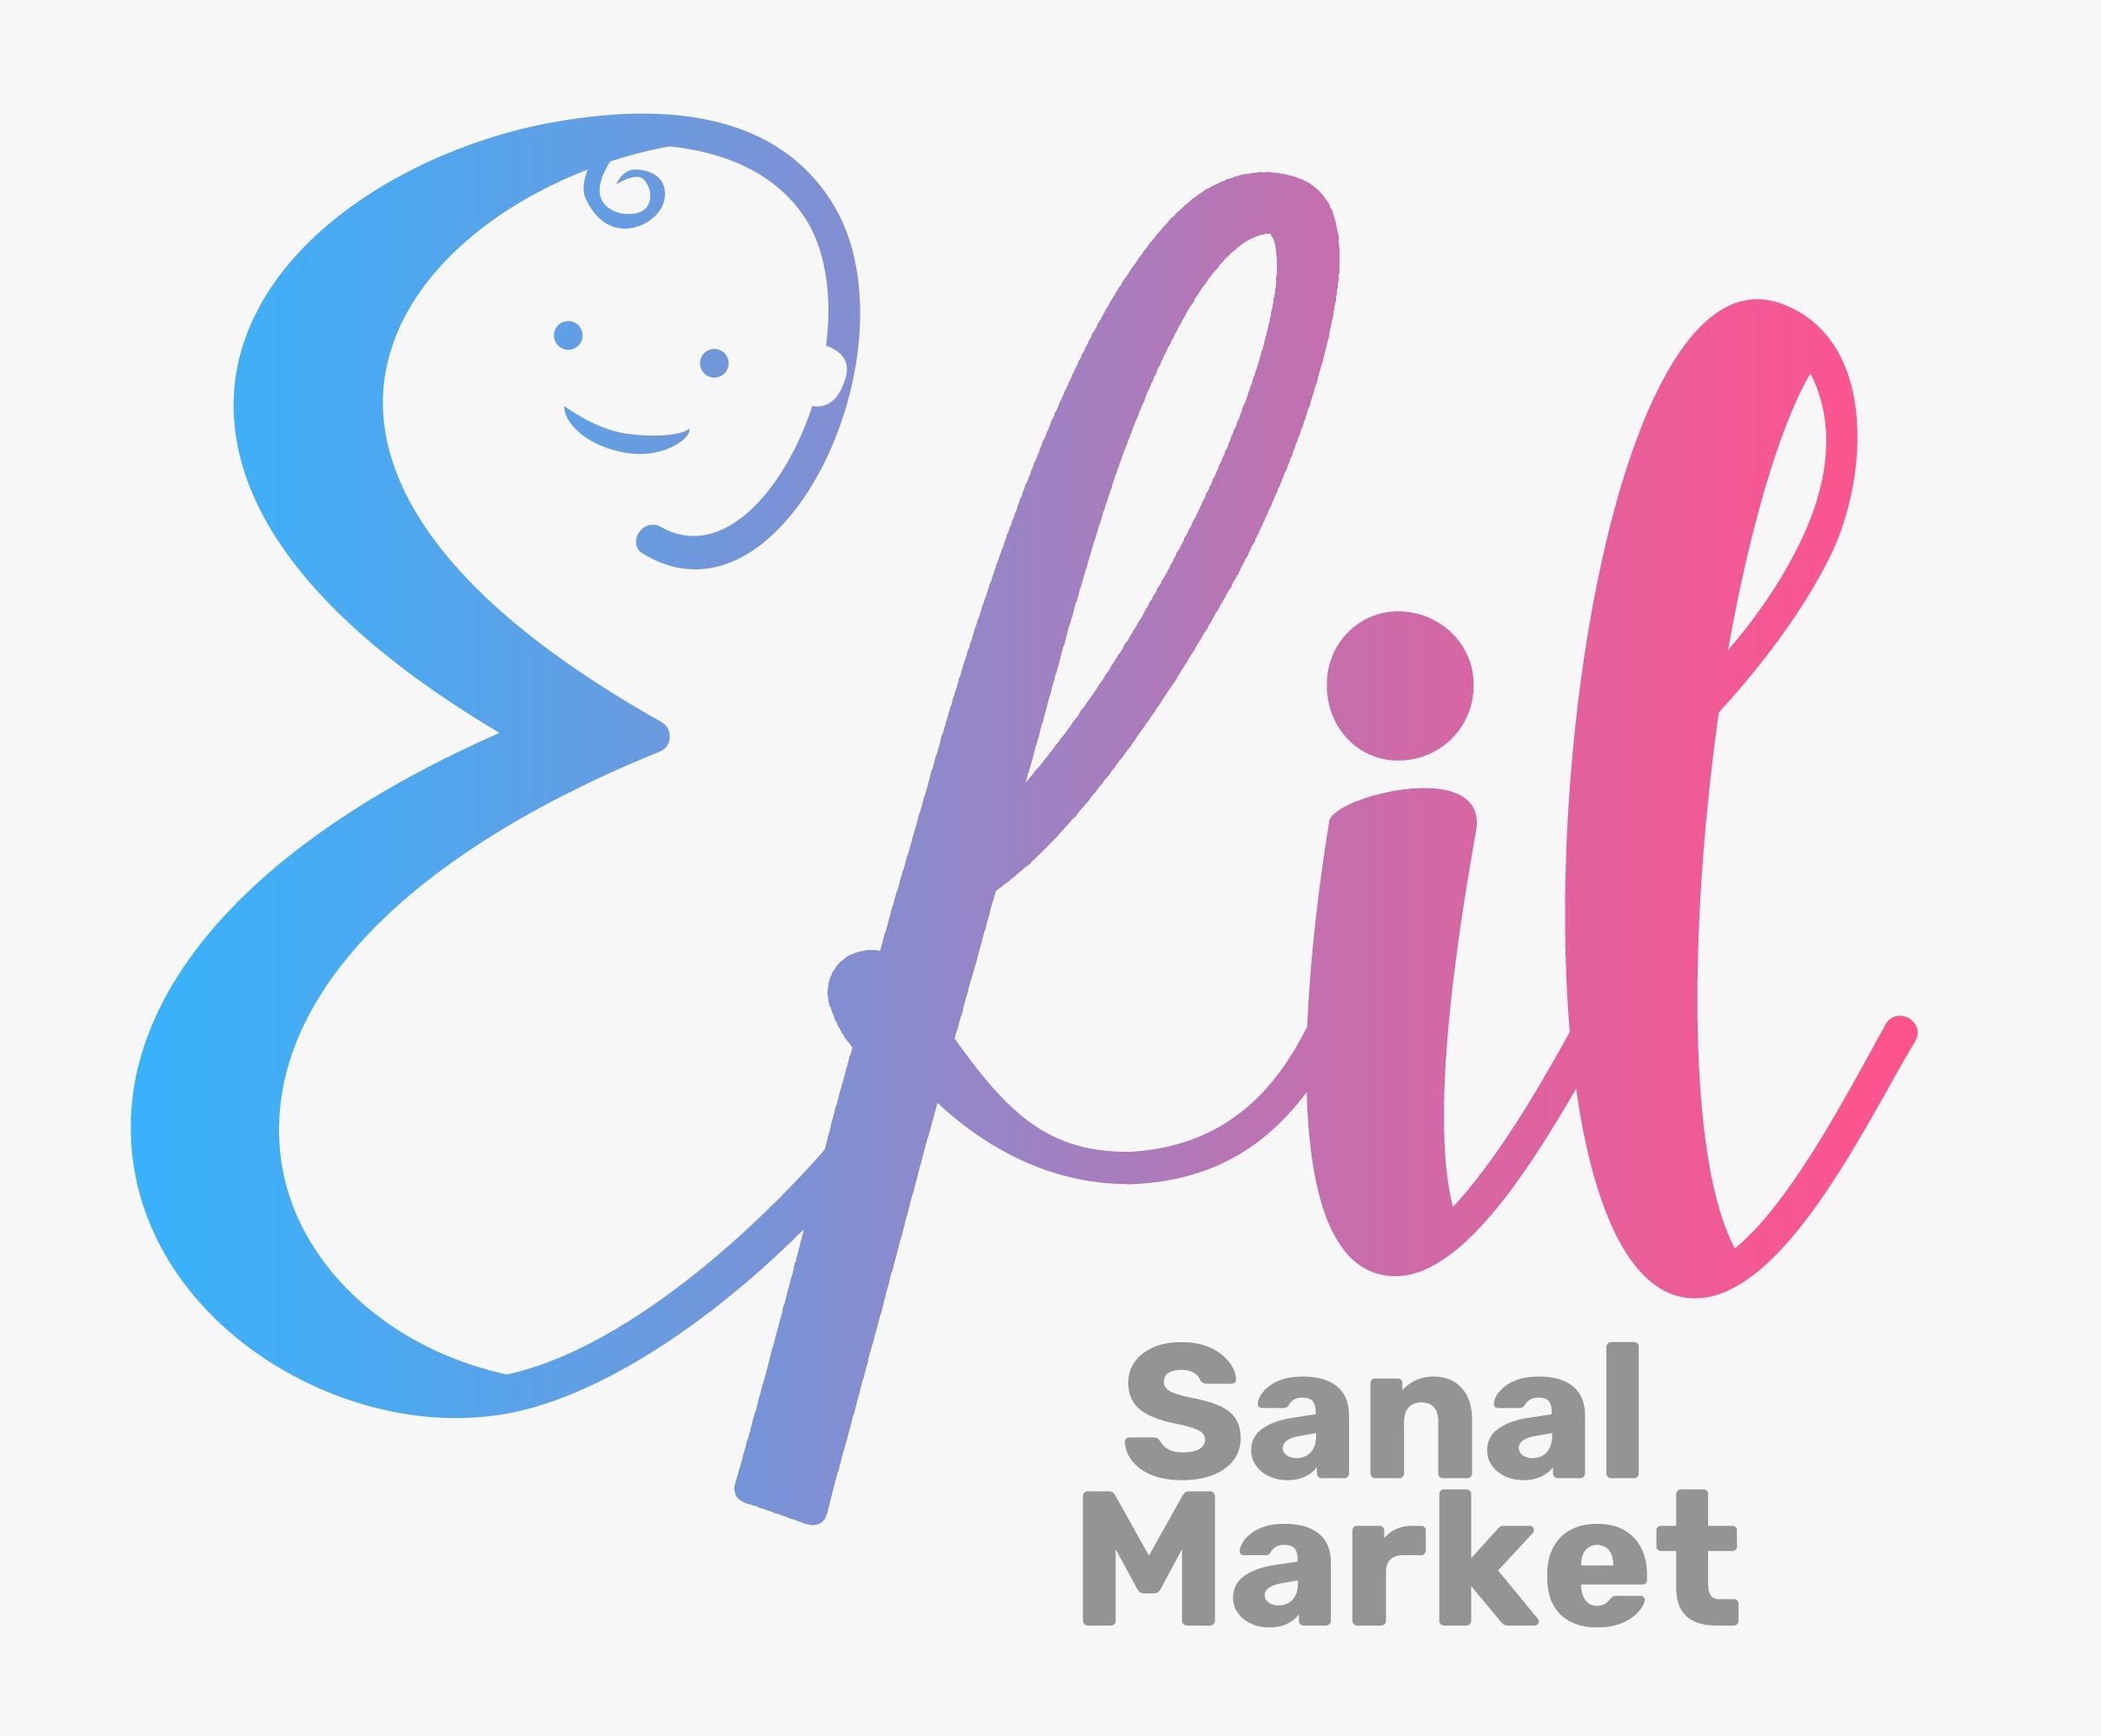 Efil Sanal Market